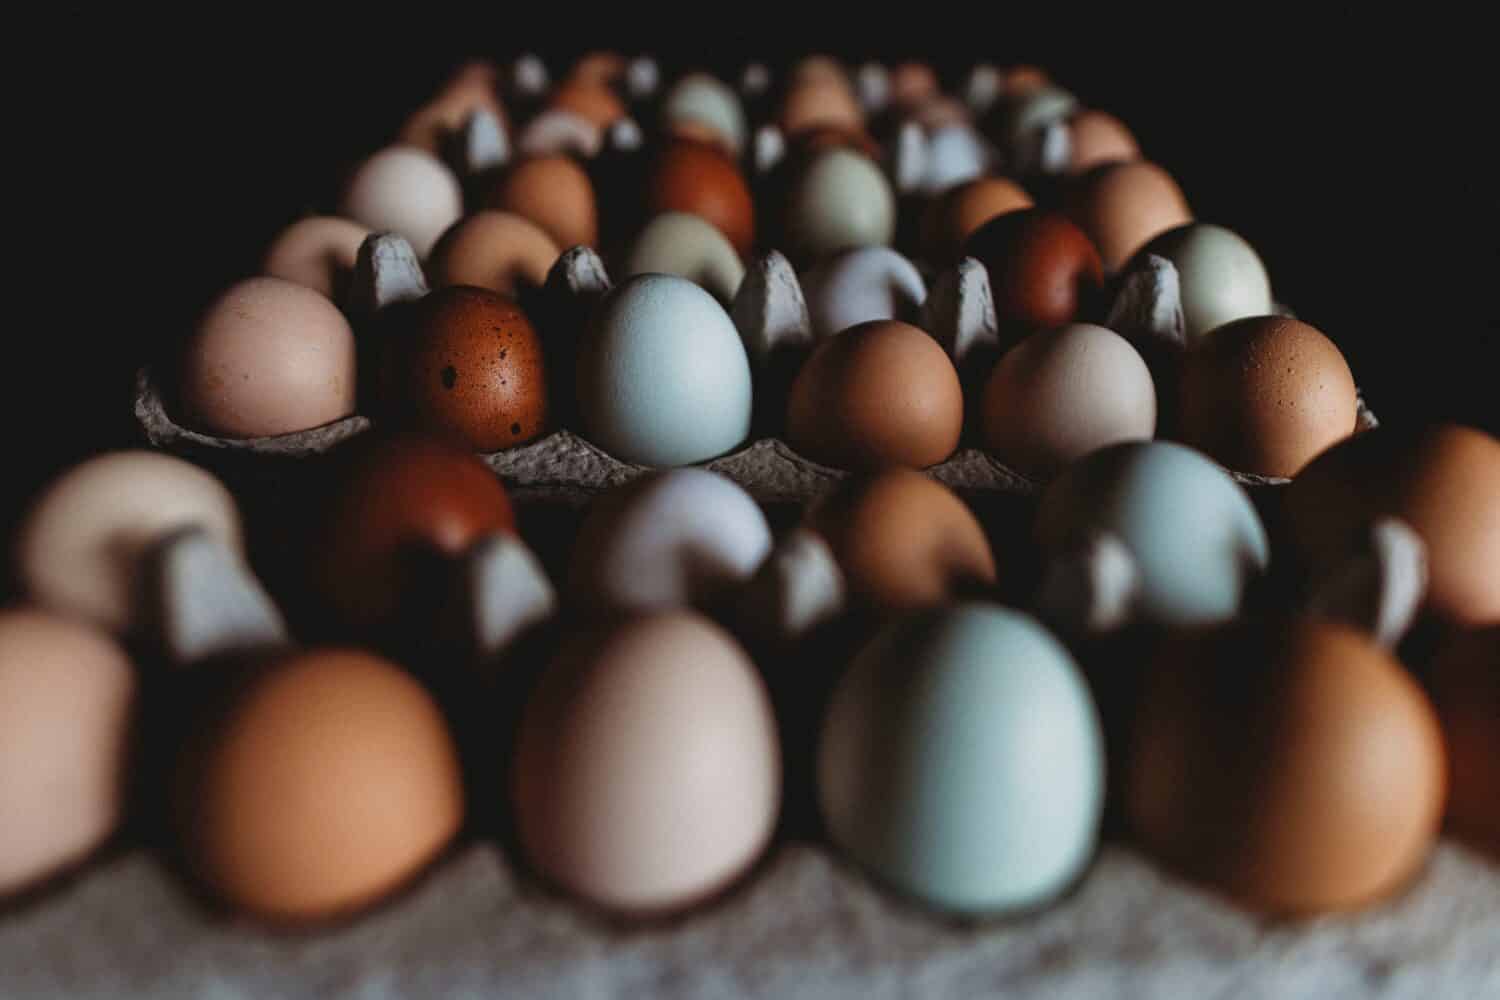 Colorful rows of fresh farm eggs